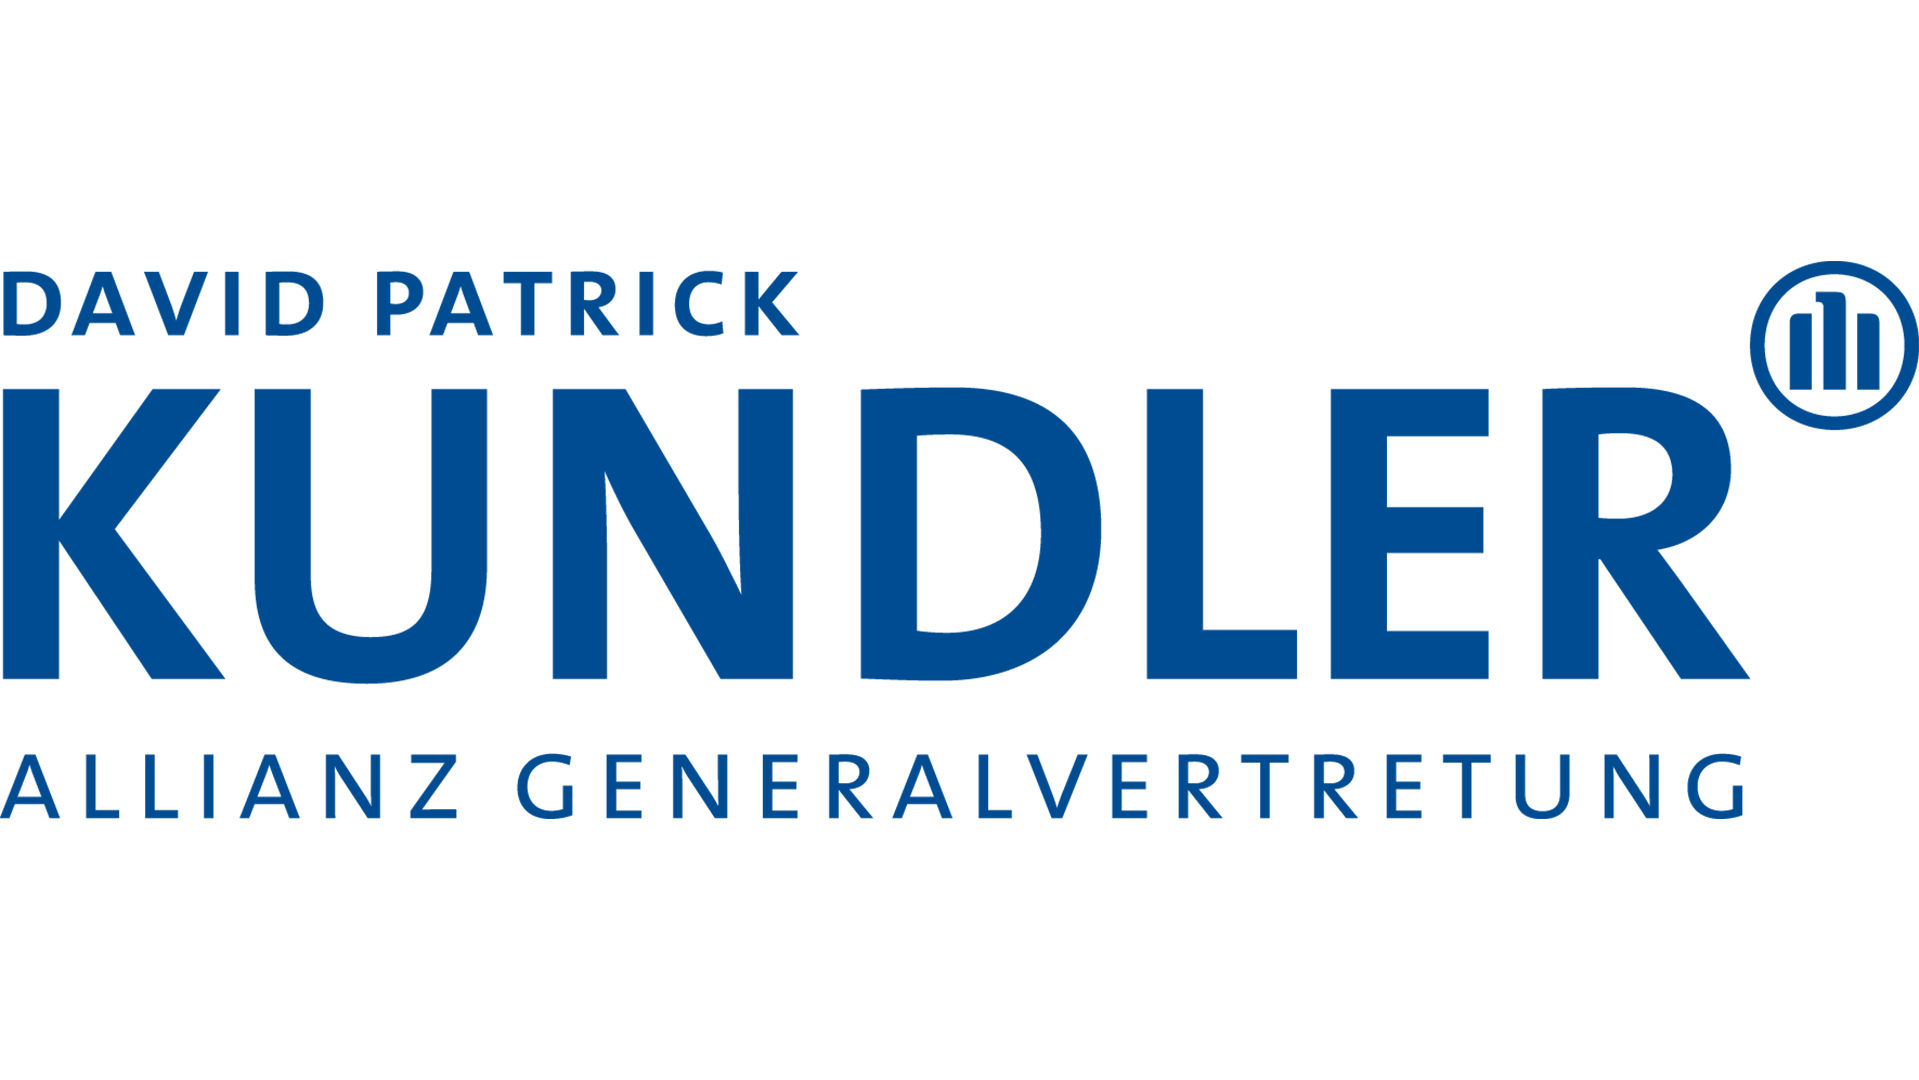 Allianz Patrick Kundler